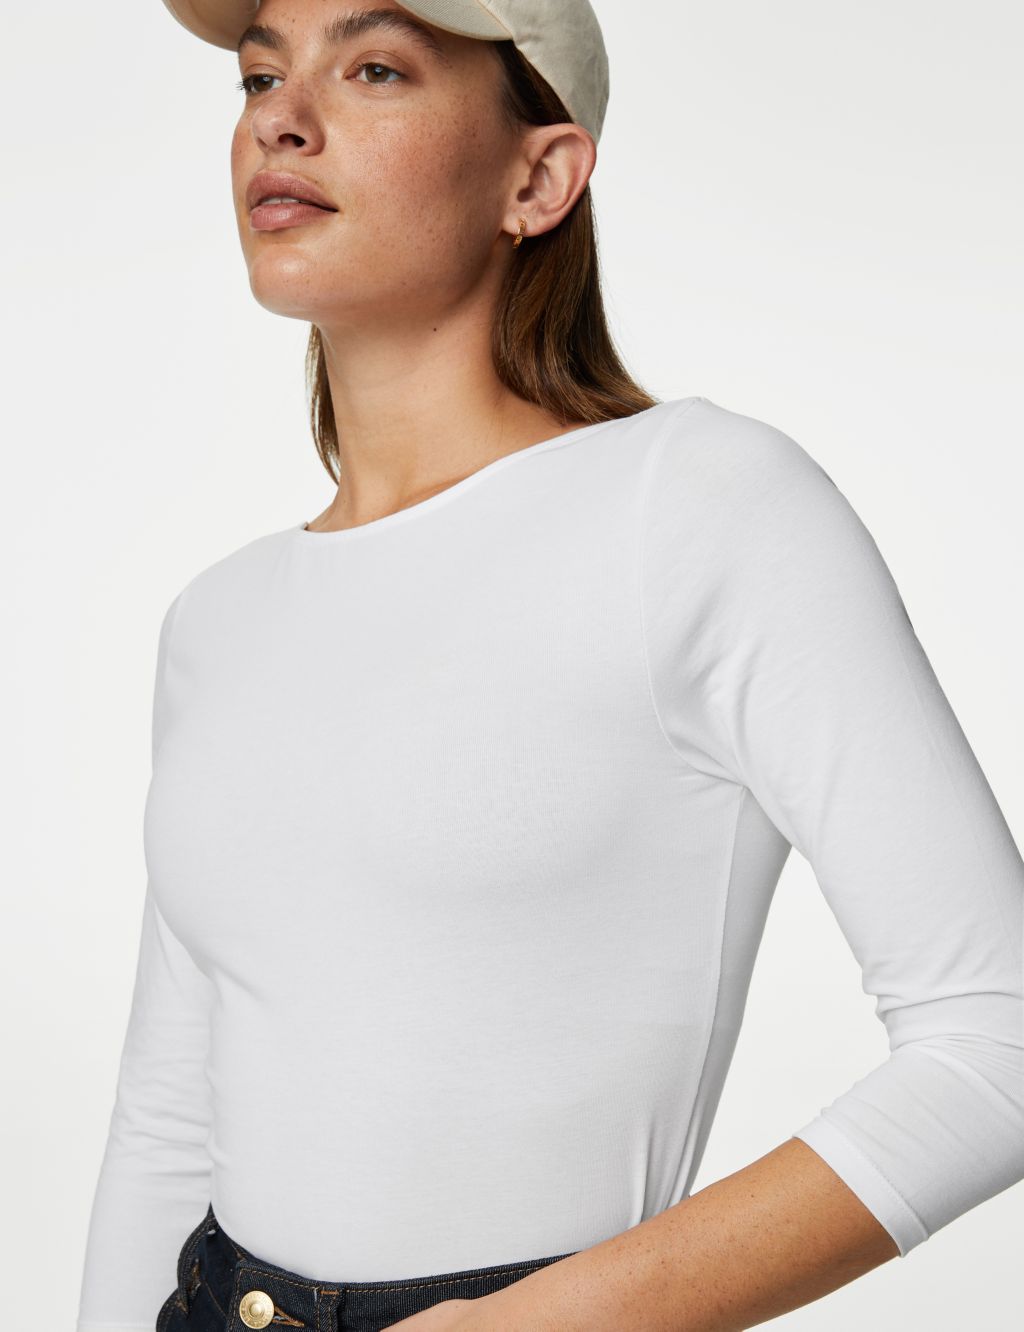 Cotton Rich Slim Fit 3/4 Sleeve T-Shirt image 3